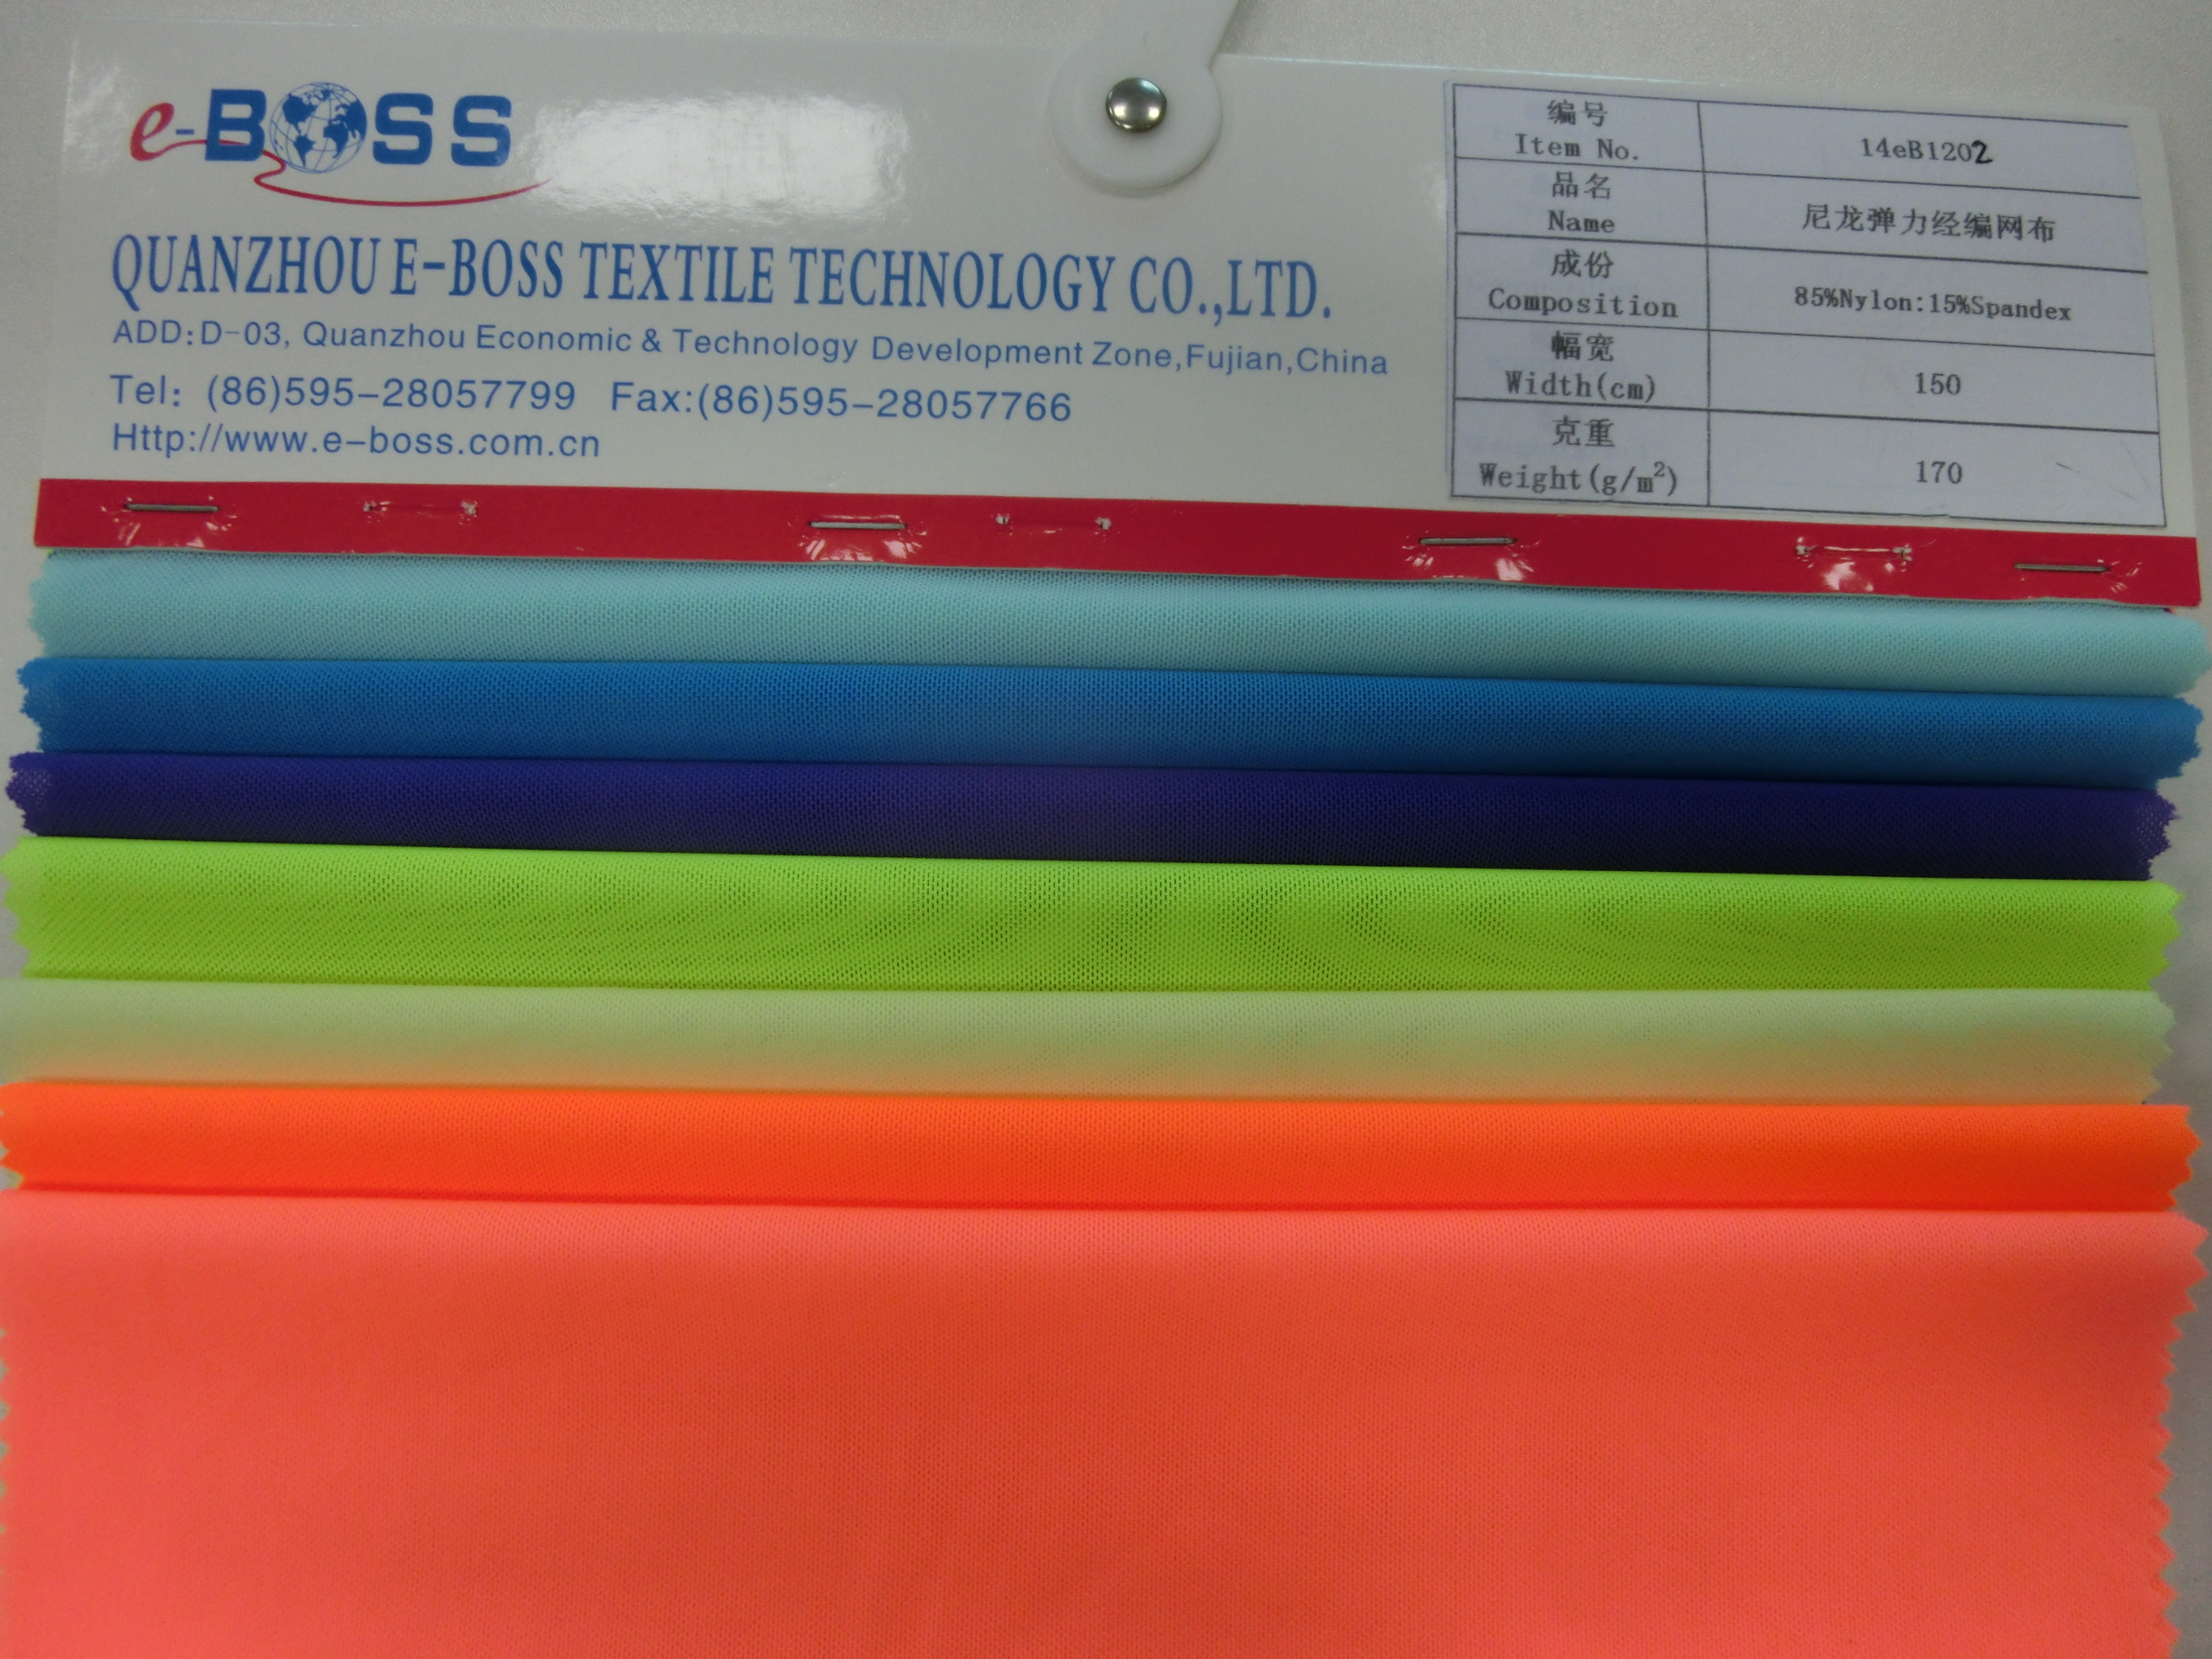 14eB1202 85%Nylon 15%Spandex Power Mesh Fabric for Insert Lining 150cmX170gm2